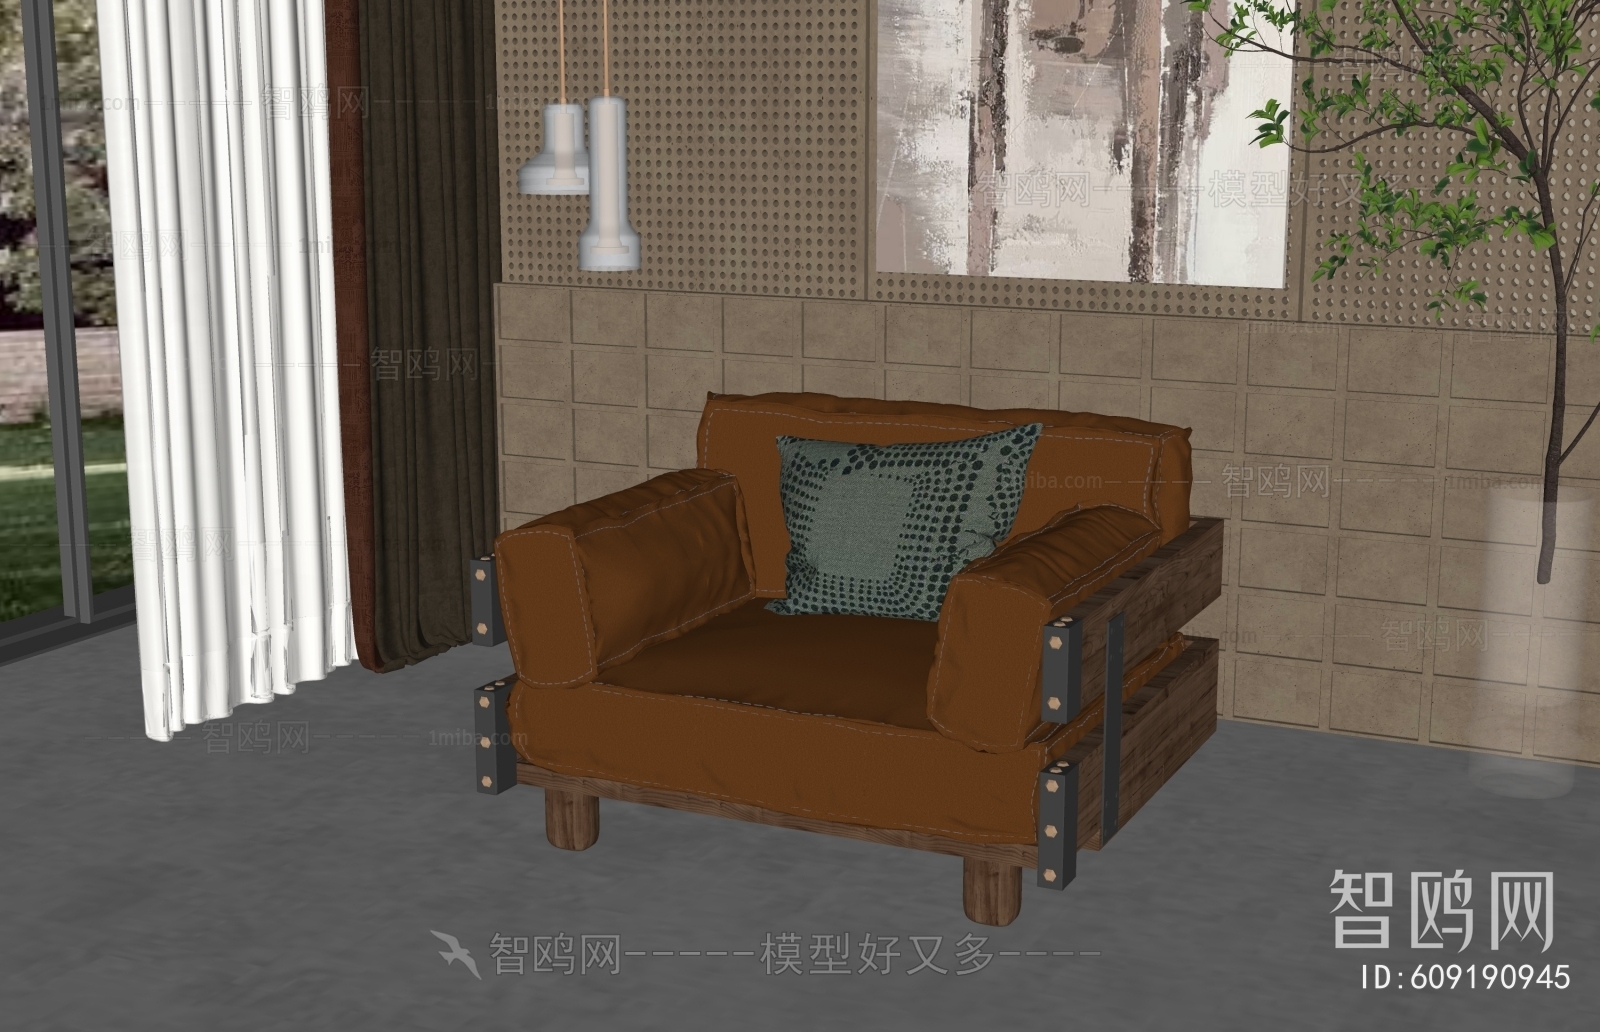 Industrial Style Single Sofa